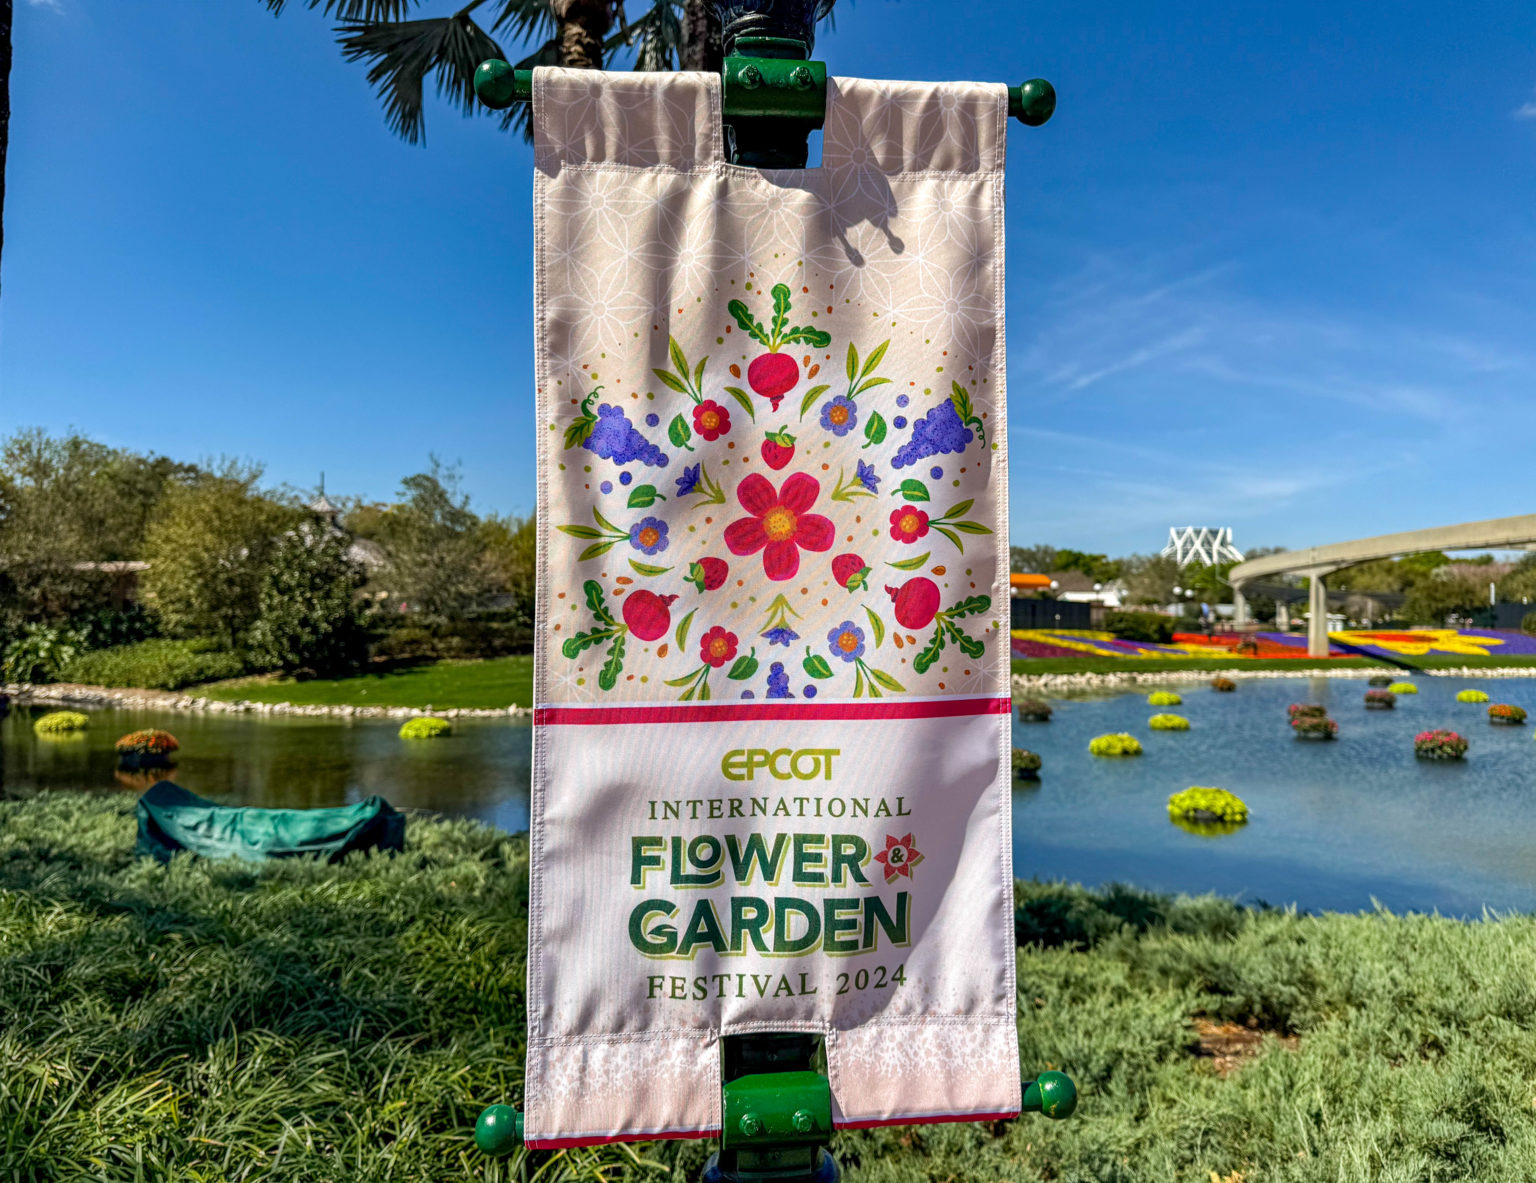 PHOTOS 2024 Flower & Garden Festival Banners Bloom at EPCOT